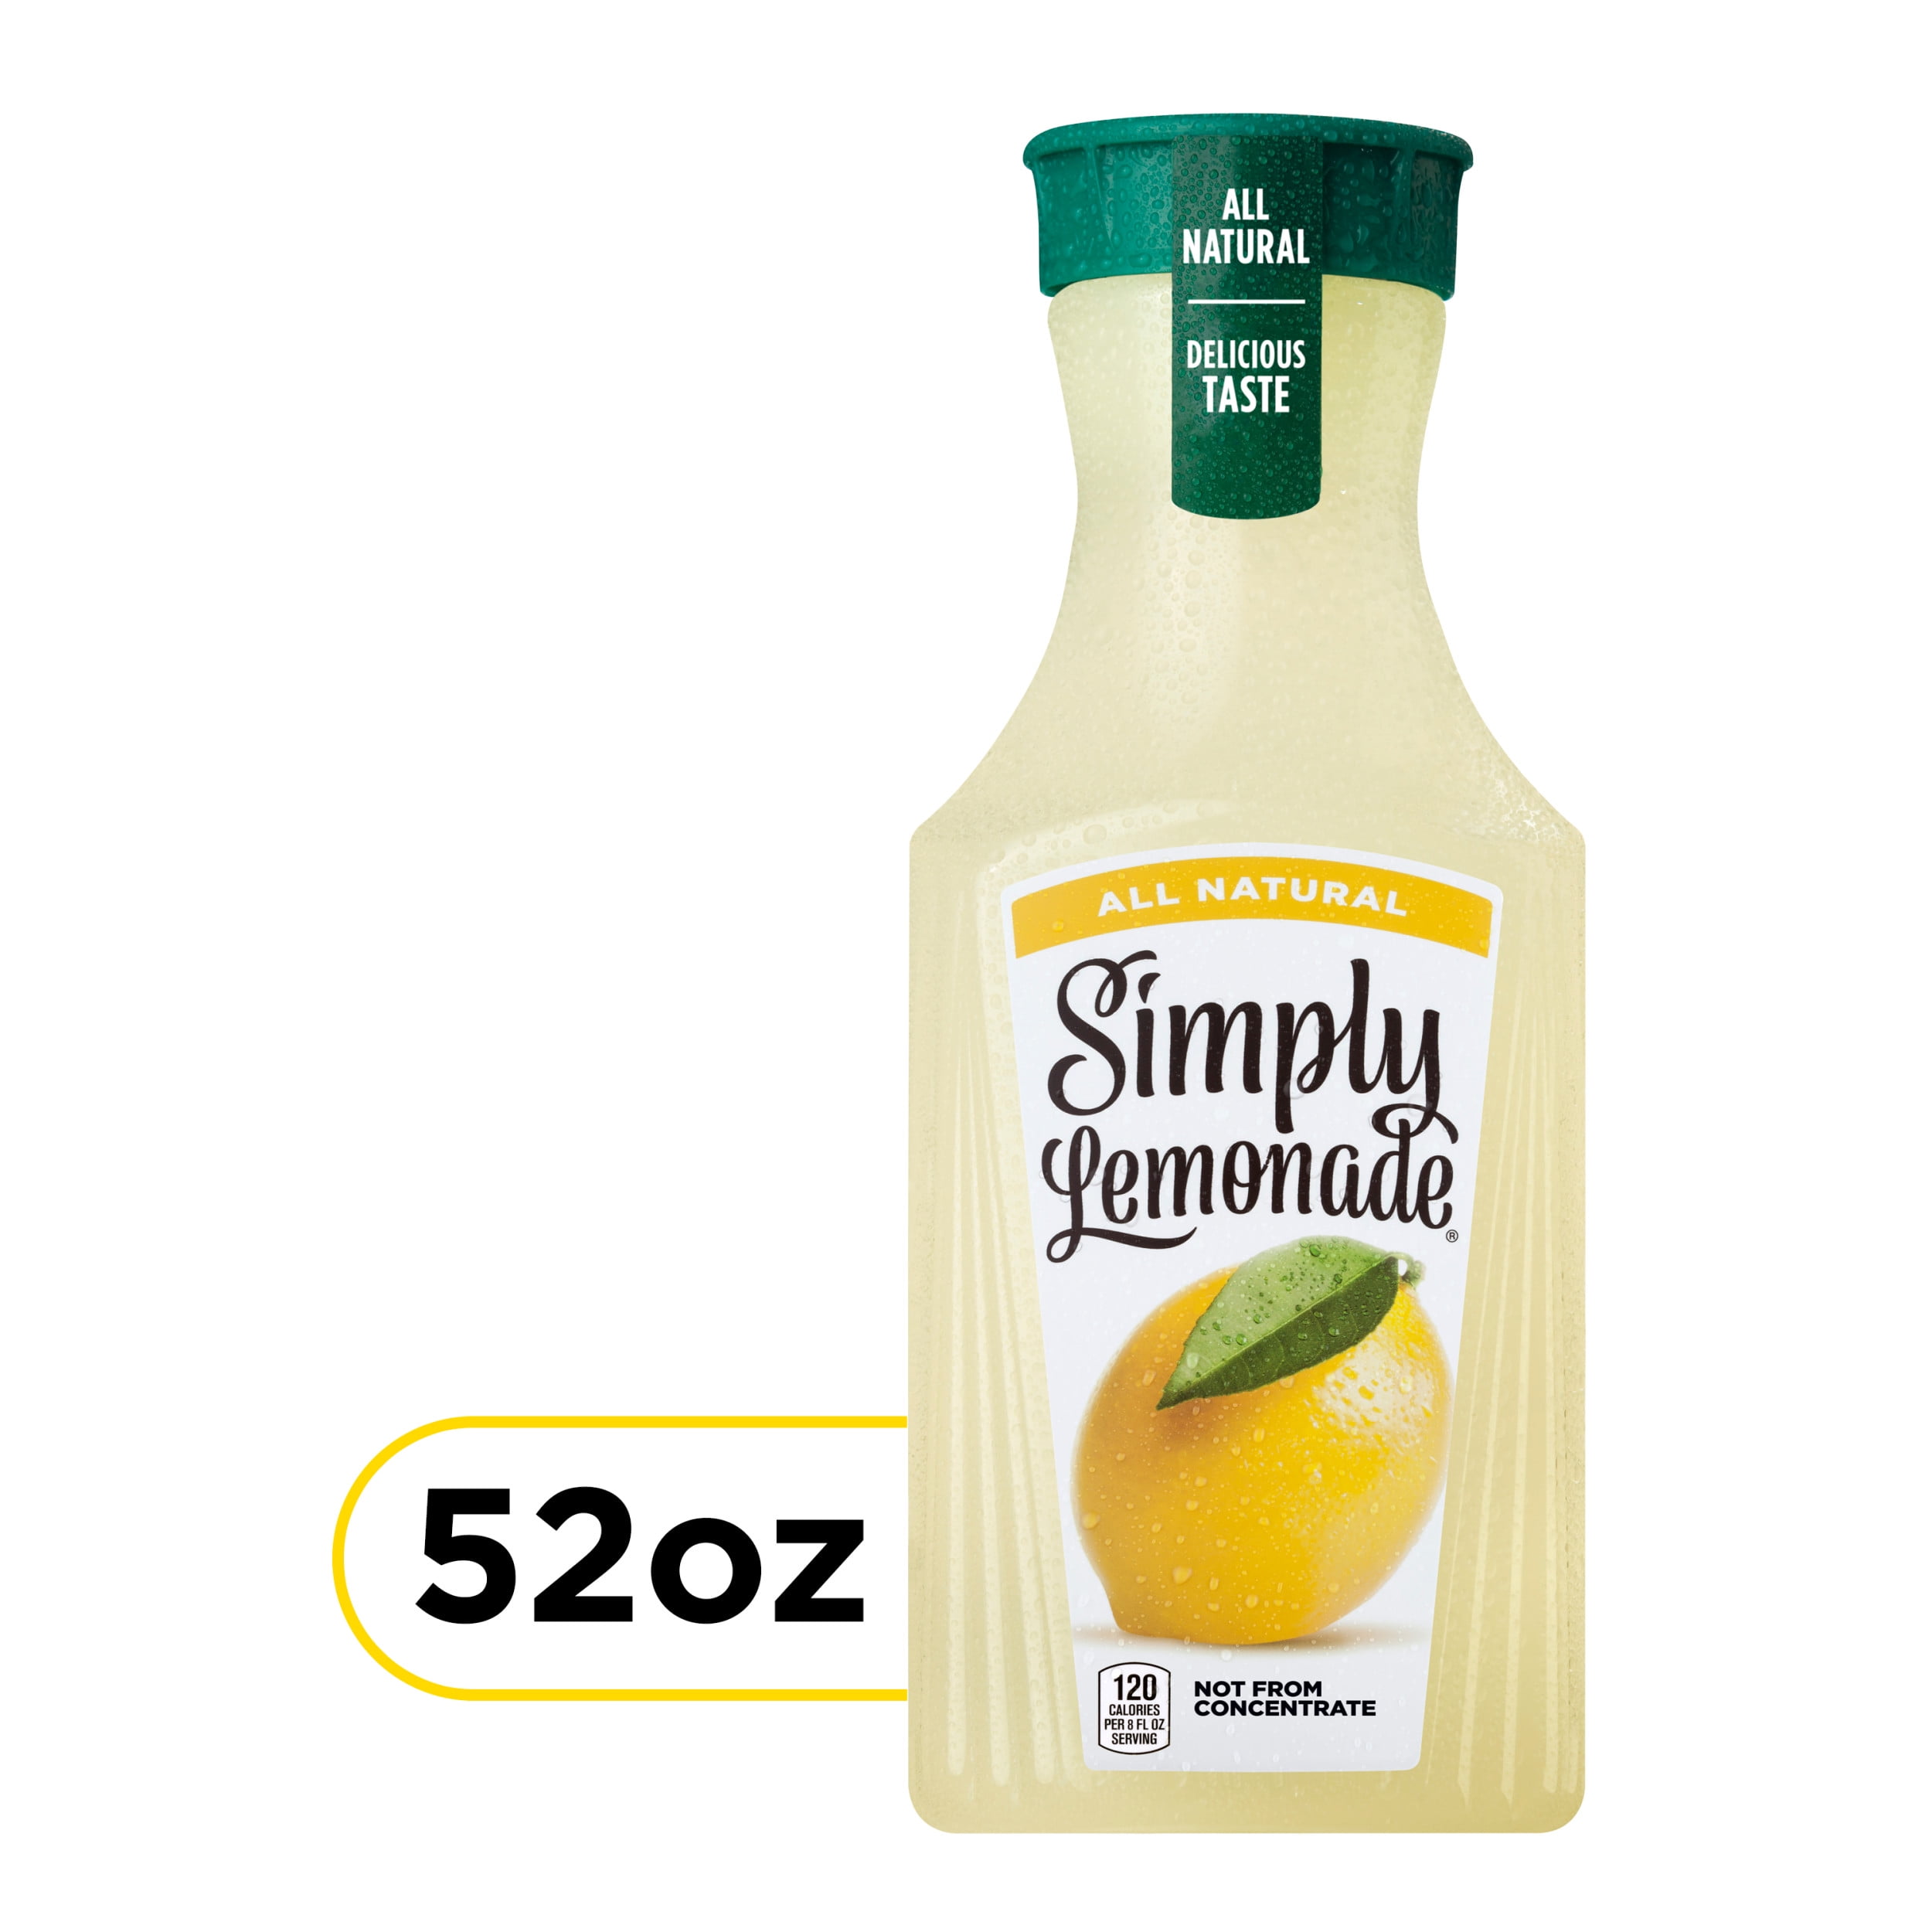 Simply Non Gmo All Natural Lemonade Juice 52 Fl Oz Bottle